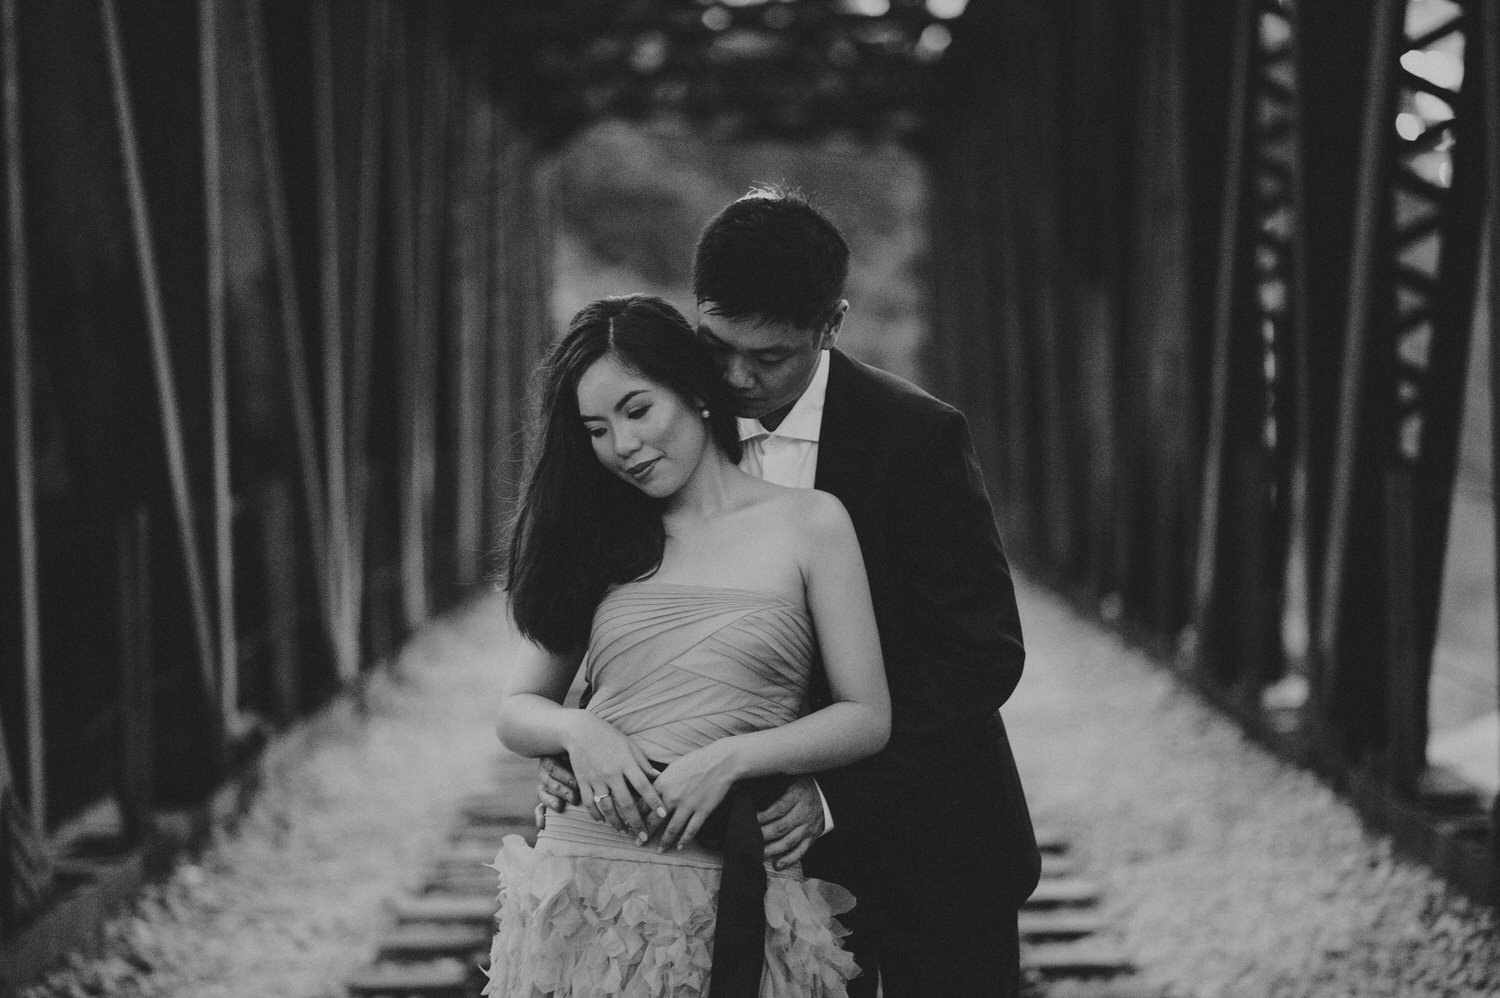 singapore prewedding destination - singapore wedding - diktatphotography - kadek artayasa - nikole + ardika - 42